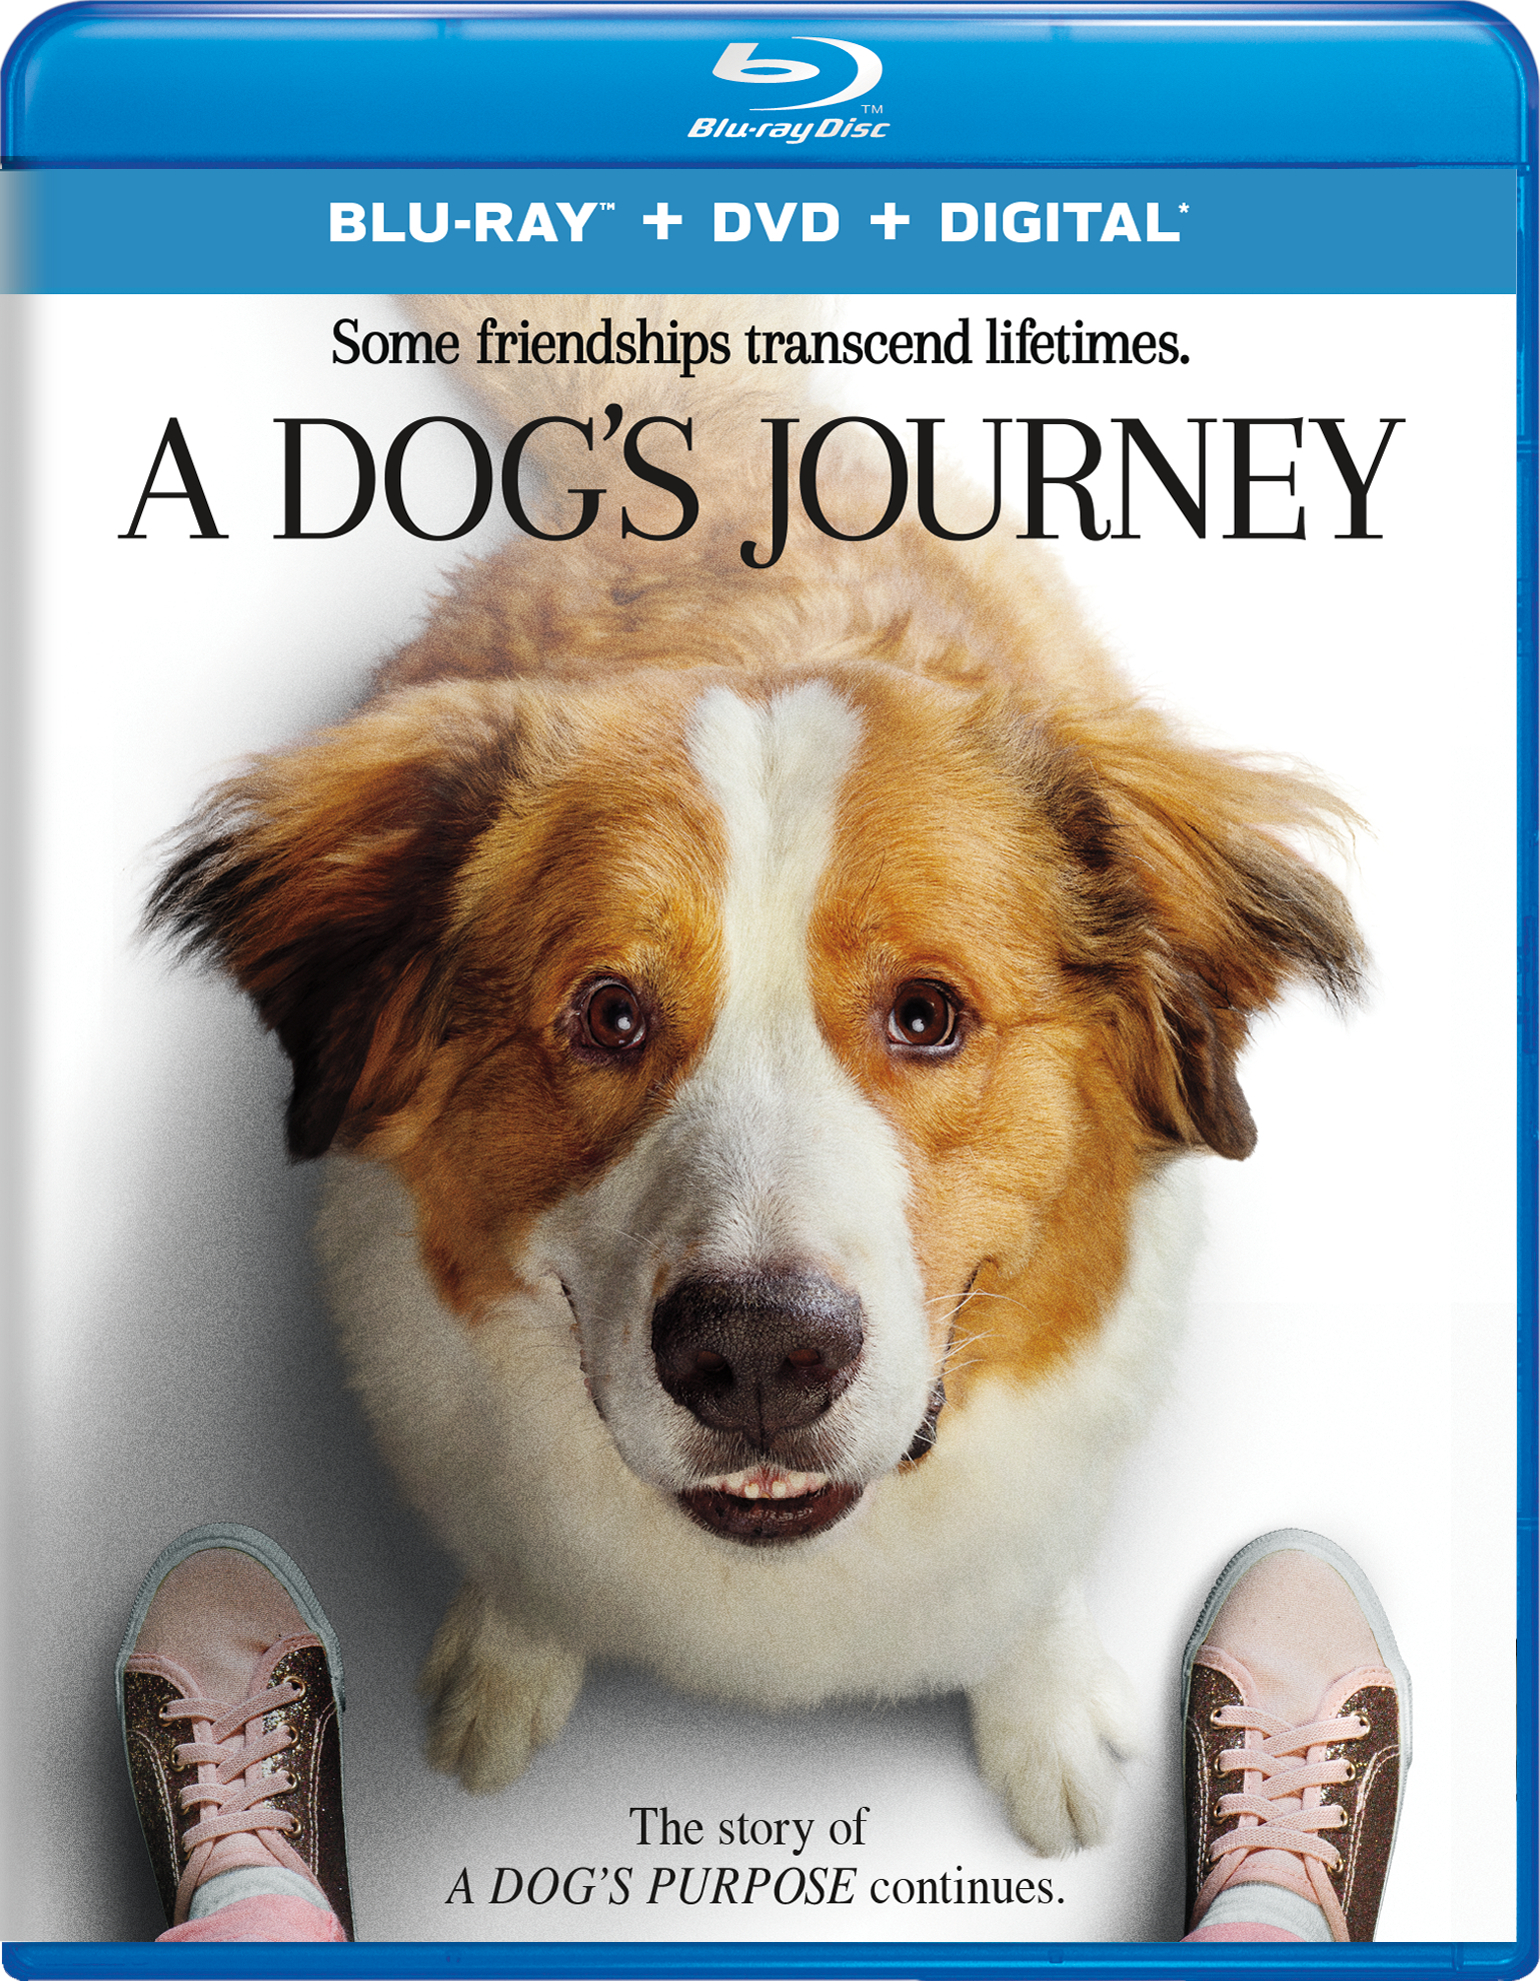 A Dog's Journey (2019) La Razón de Estar Contigo: Un Nuevo Viaje (2019) [E-AC3 5.1 + SUP] [Blu Ray-Rip] [GOOGLEDRIVE*] 242908_front